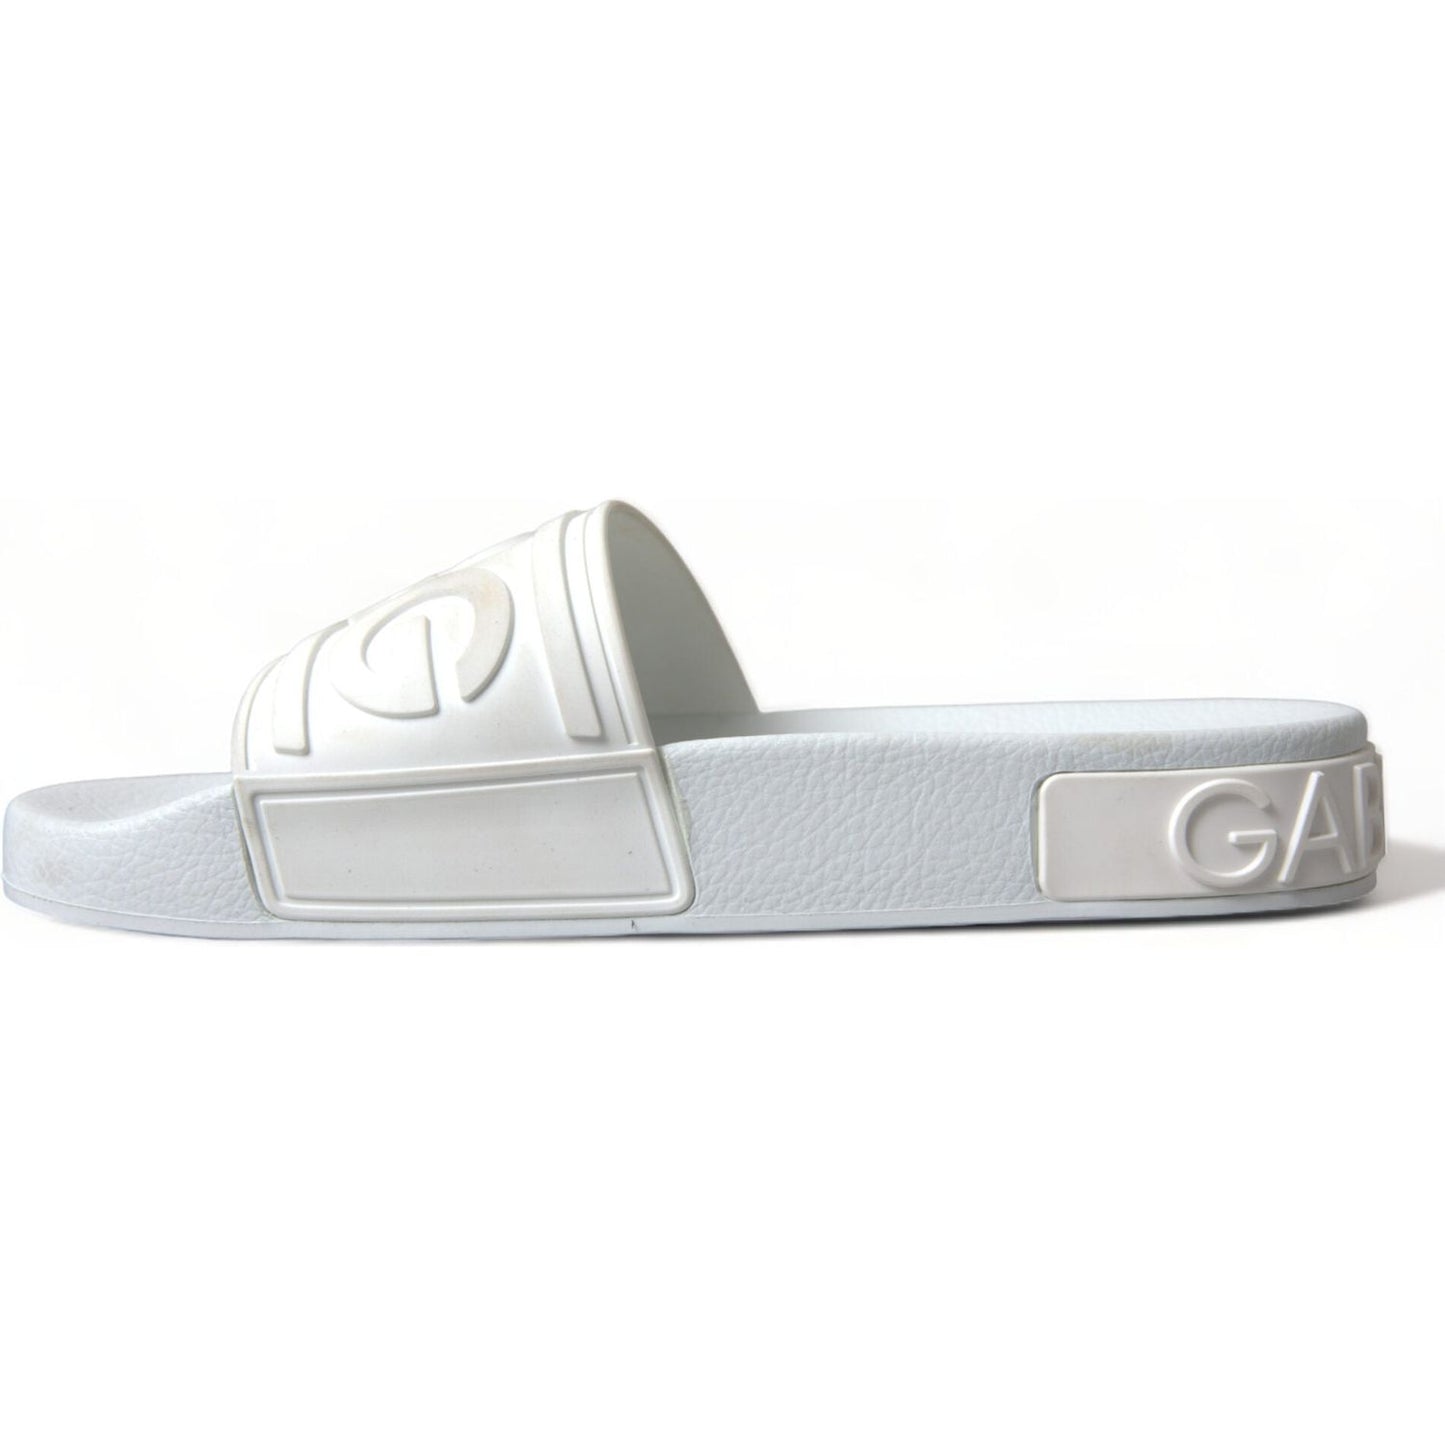 Dolce & Gabbana Elegant White Logo Slides white-rubber-sandals-slides-beachwear-shoes